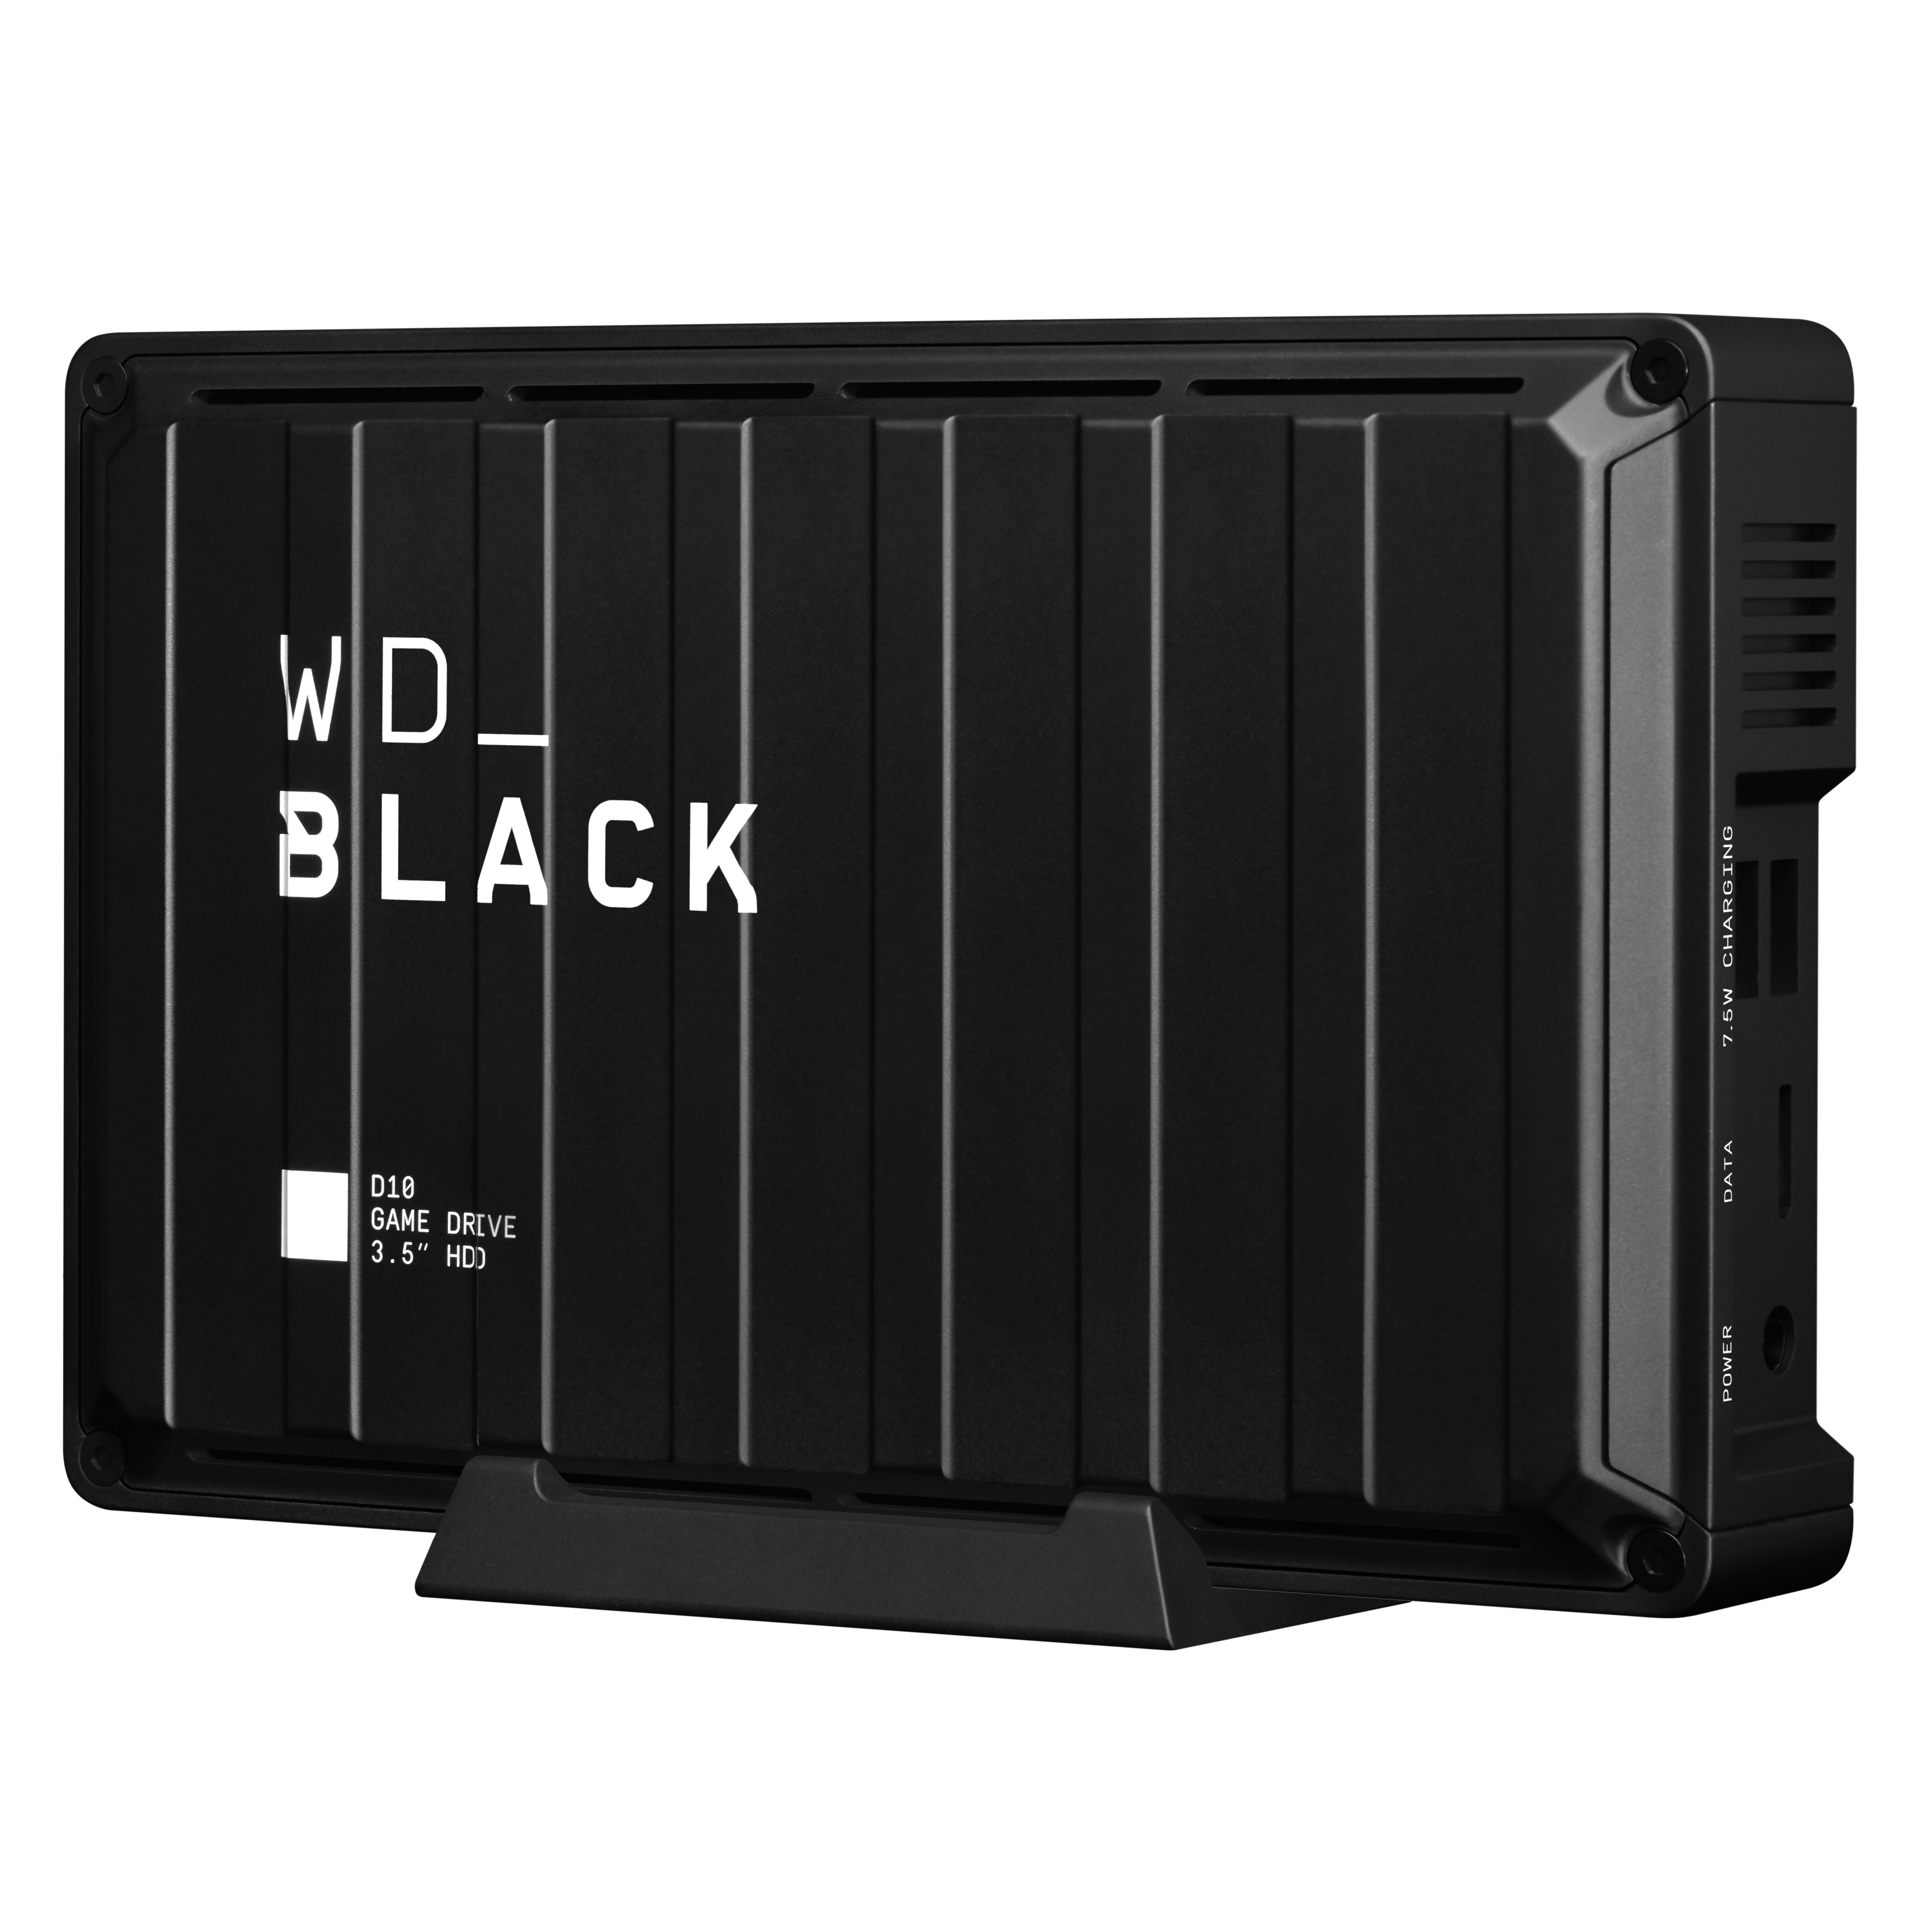 WD_BLACK™ Game Zoll, 3,5 D10 8 Gaming-Festplatte, Schwarz/Weiß TB, Drive